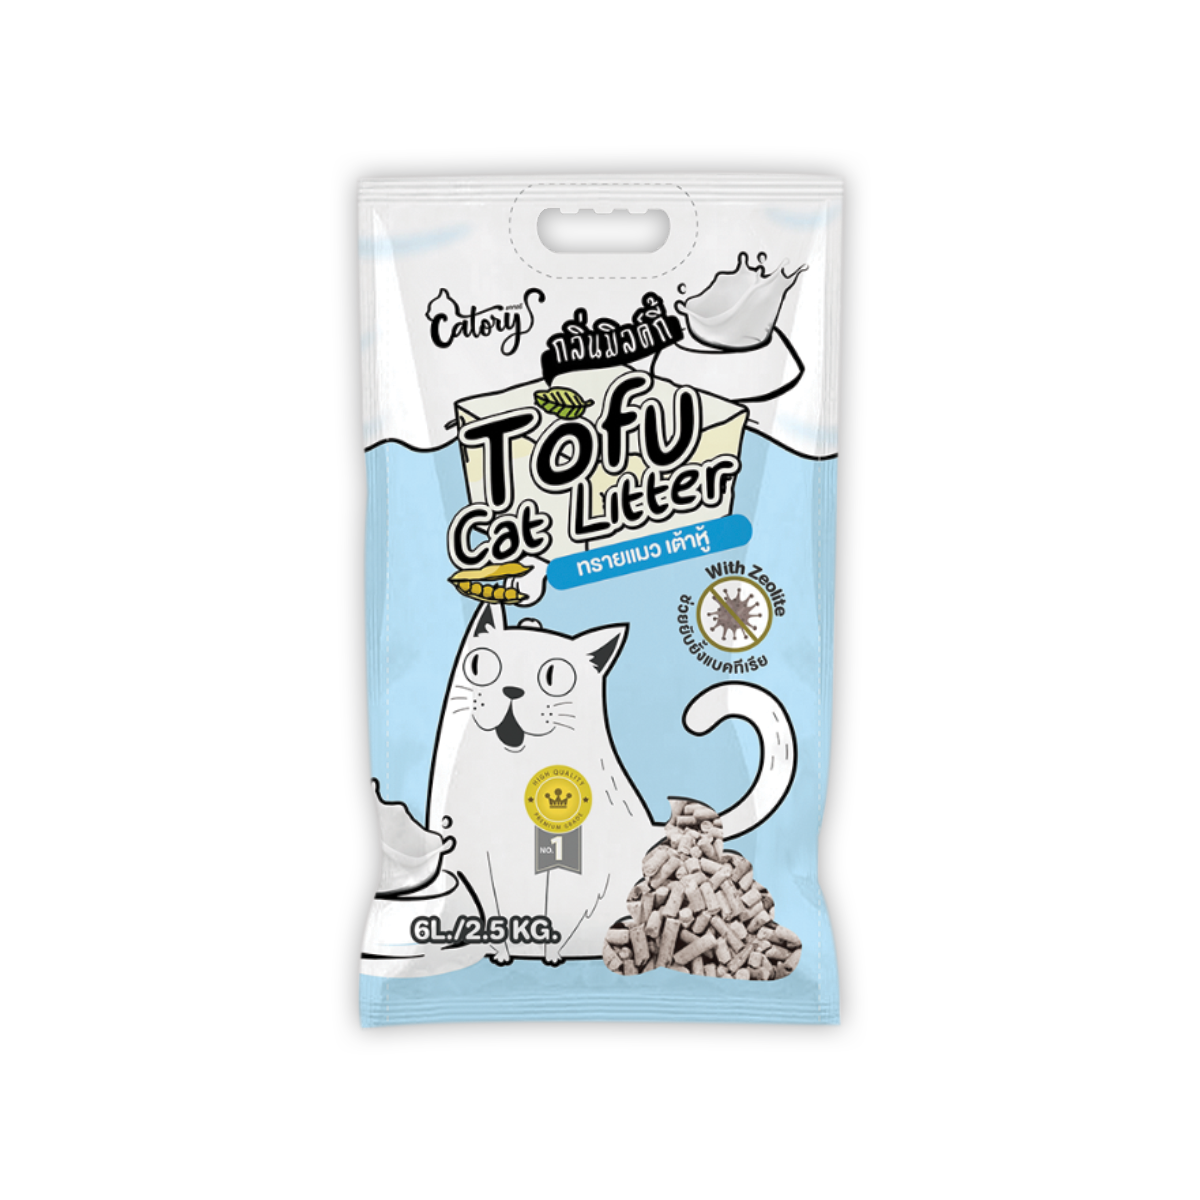 Catory Tofu Cat Litter with Zeolite แคทอรี่ ทรายเต้าหู้ธรรมชาติ กลิ่นมิลค์กี้ ขนาด 6 ลิตร